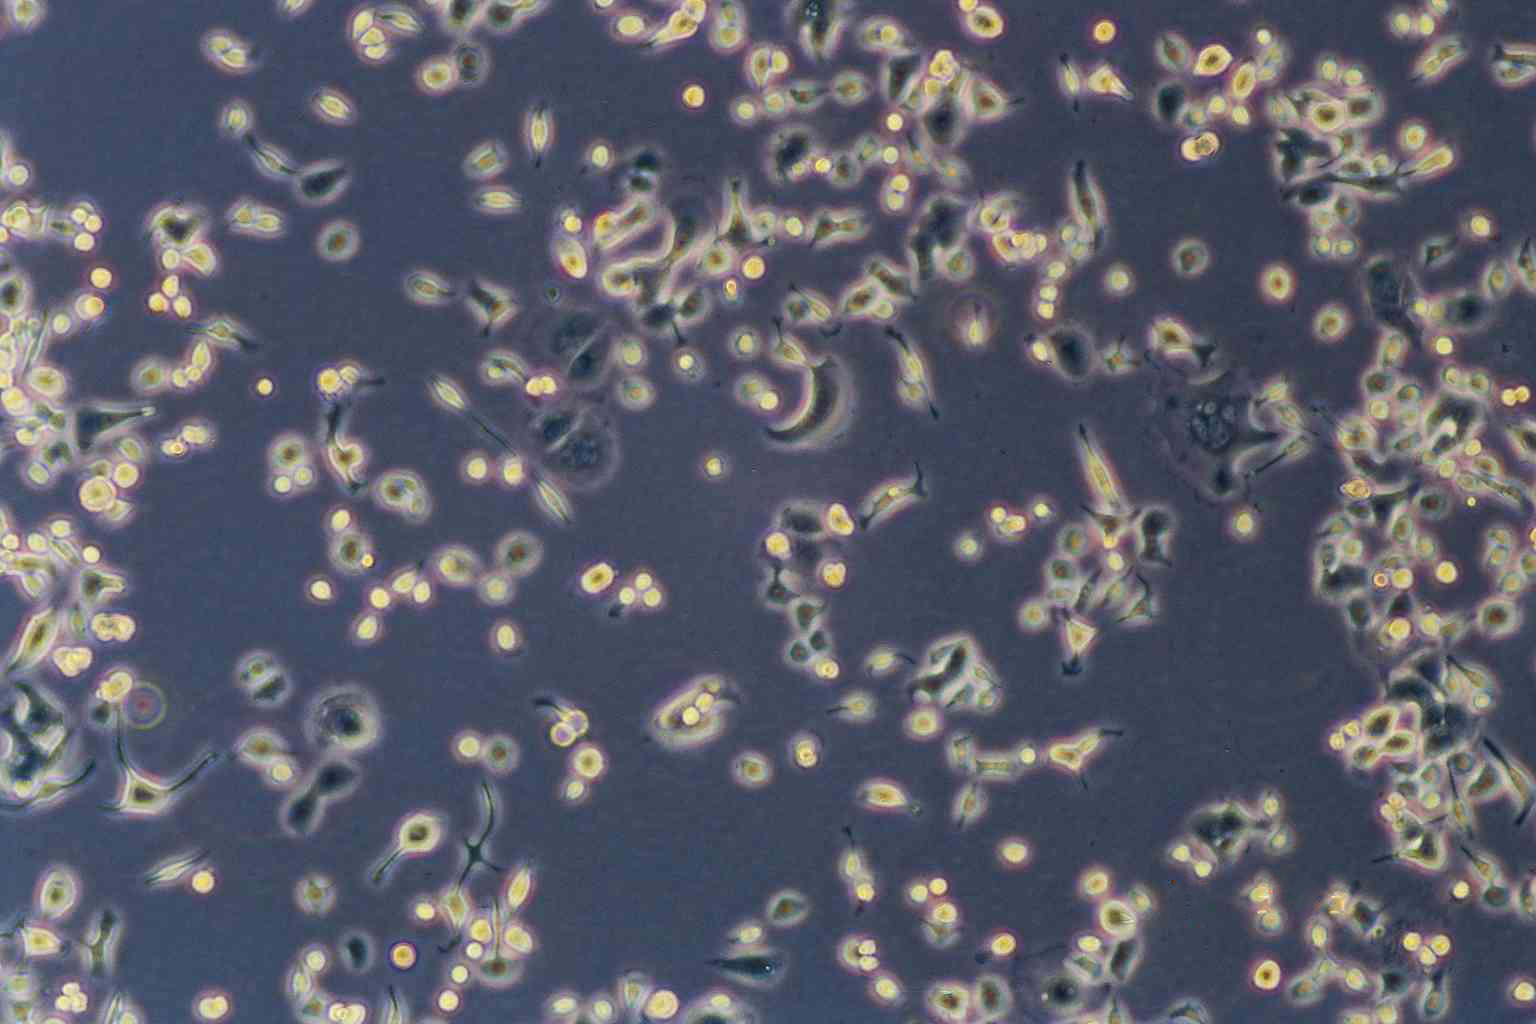 KYSE-150 Cells|人食管鳞癌细胞系,KYSE-150 Cells